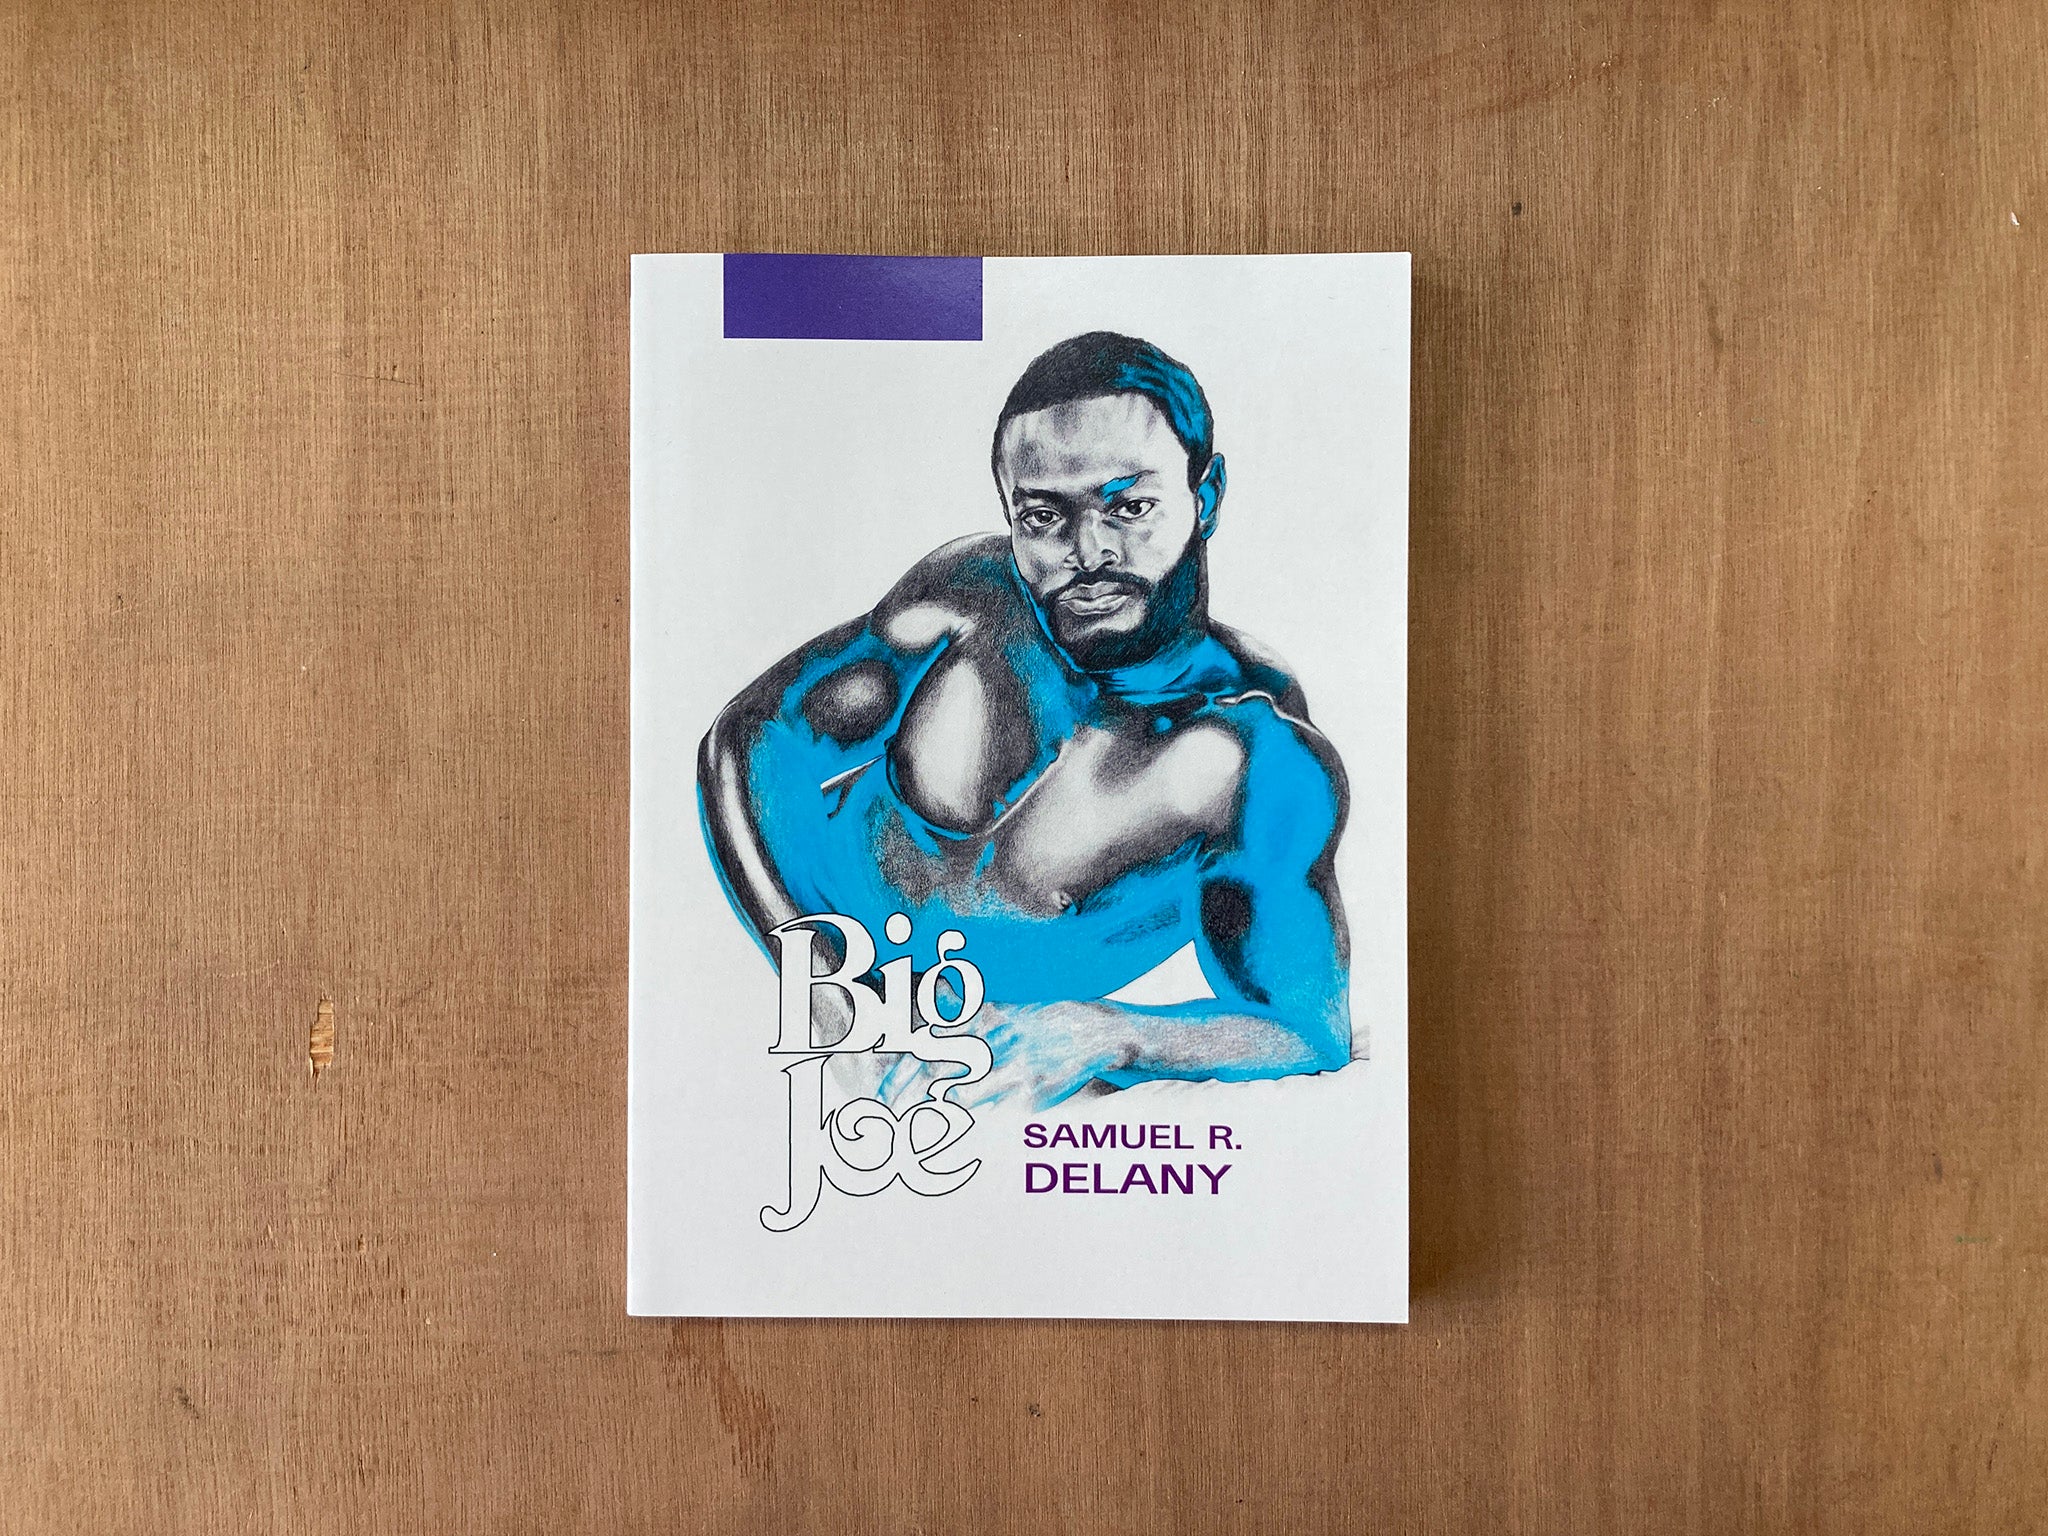 BIG JOE by Samuel R. Delany